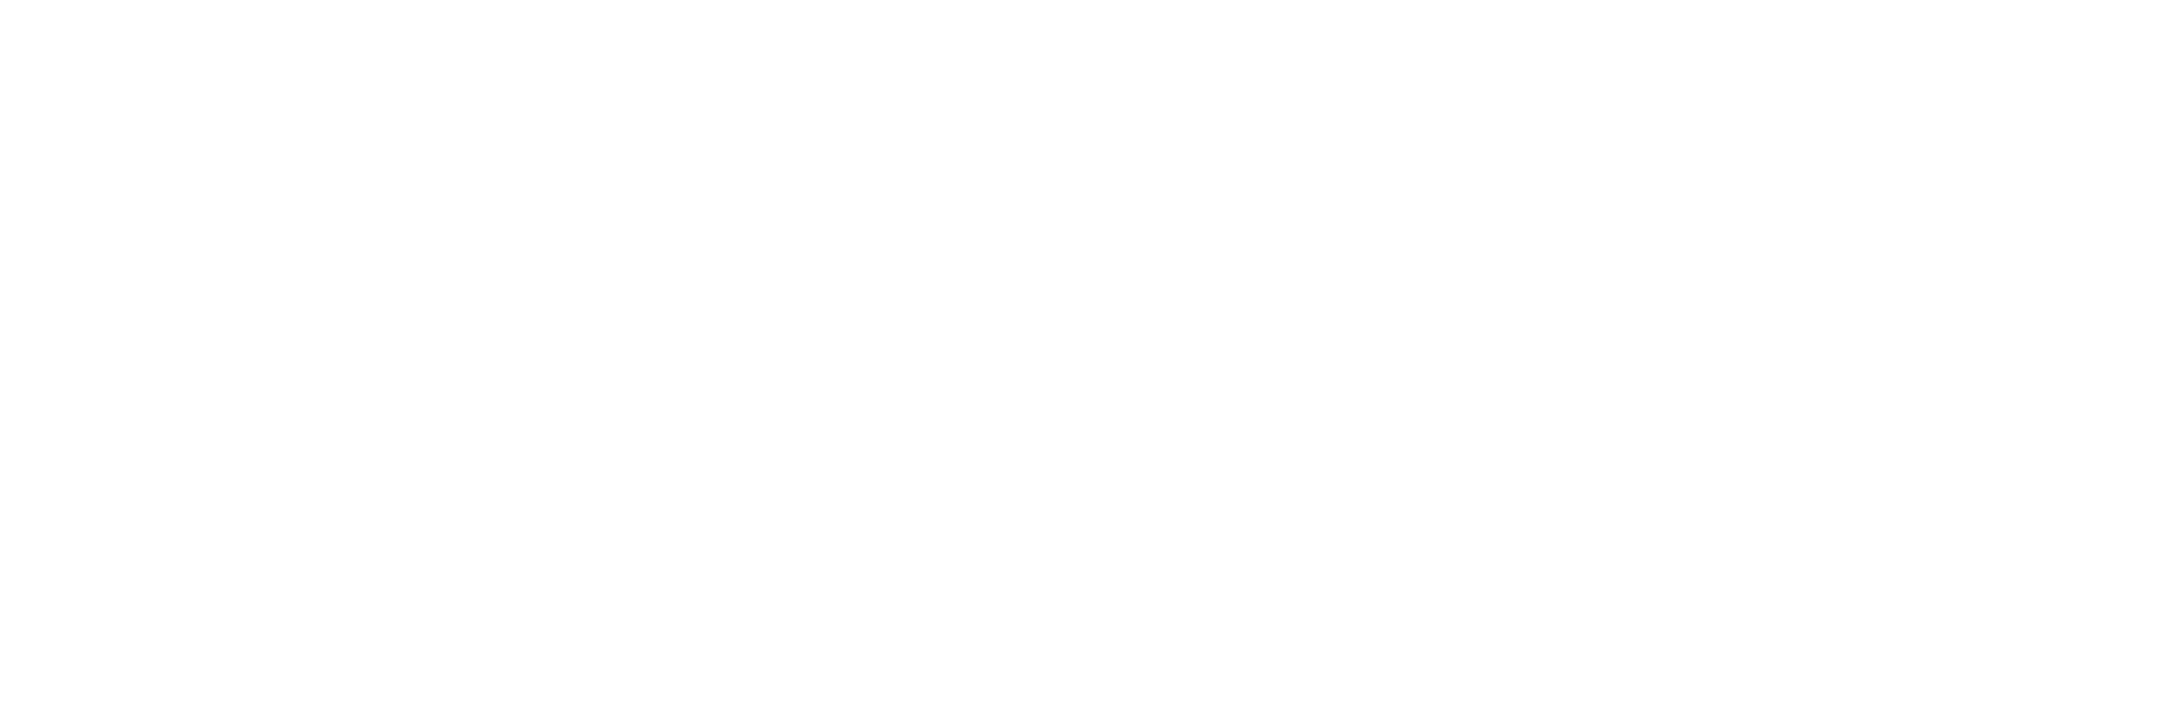 google white logo 1 - Google Logo